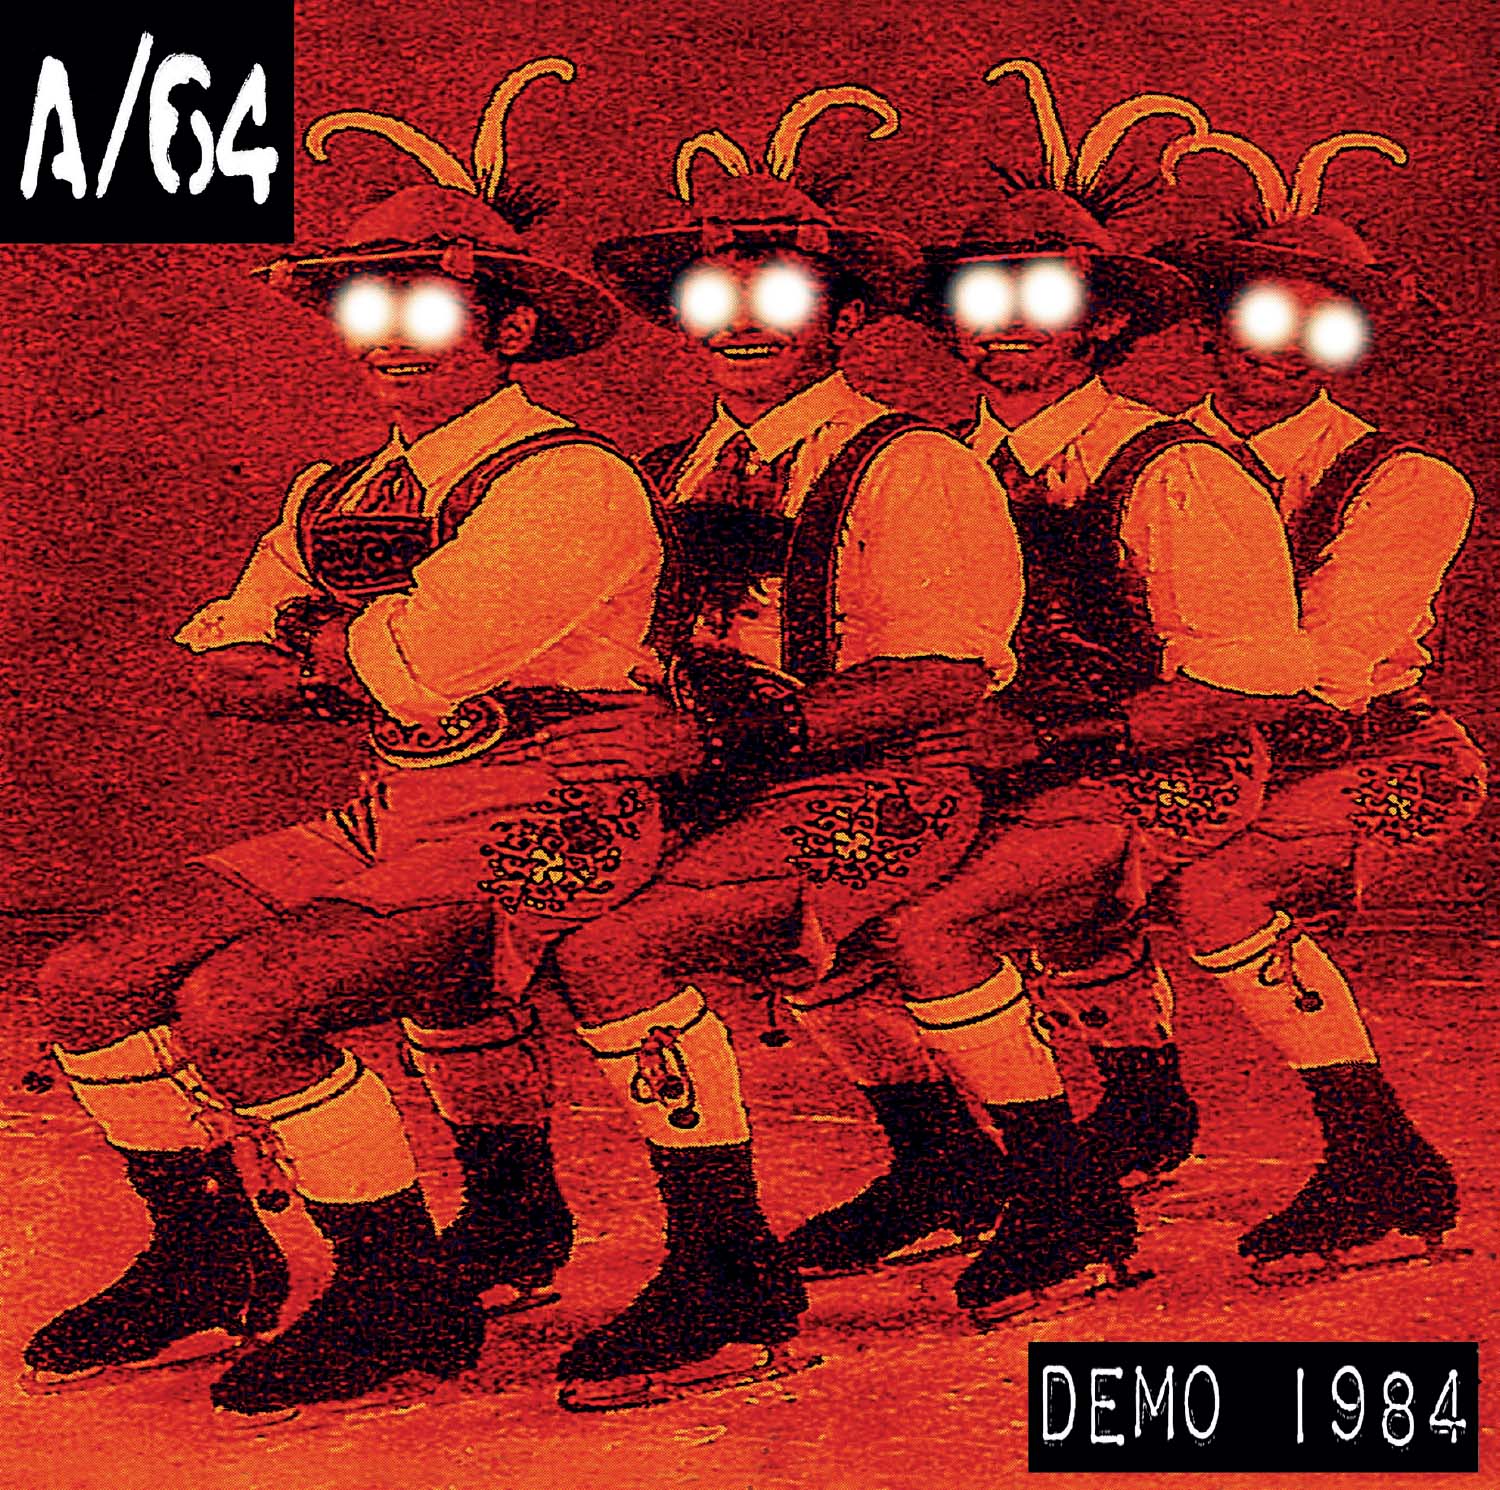 A/64 – Demo 1984